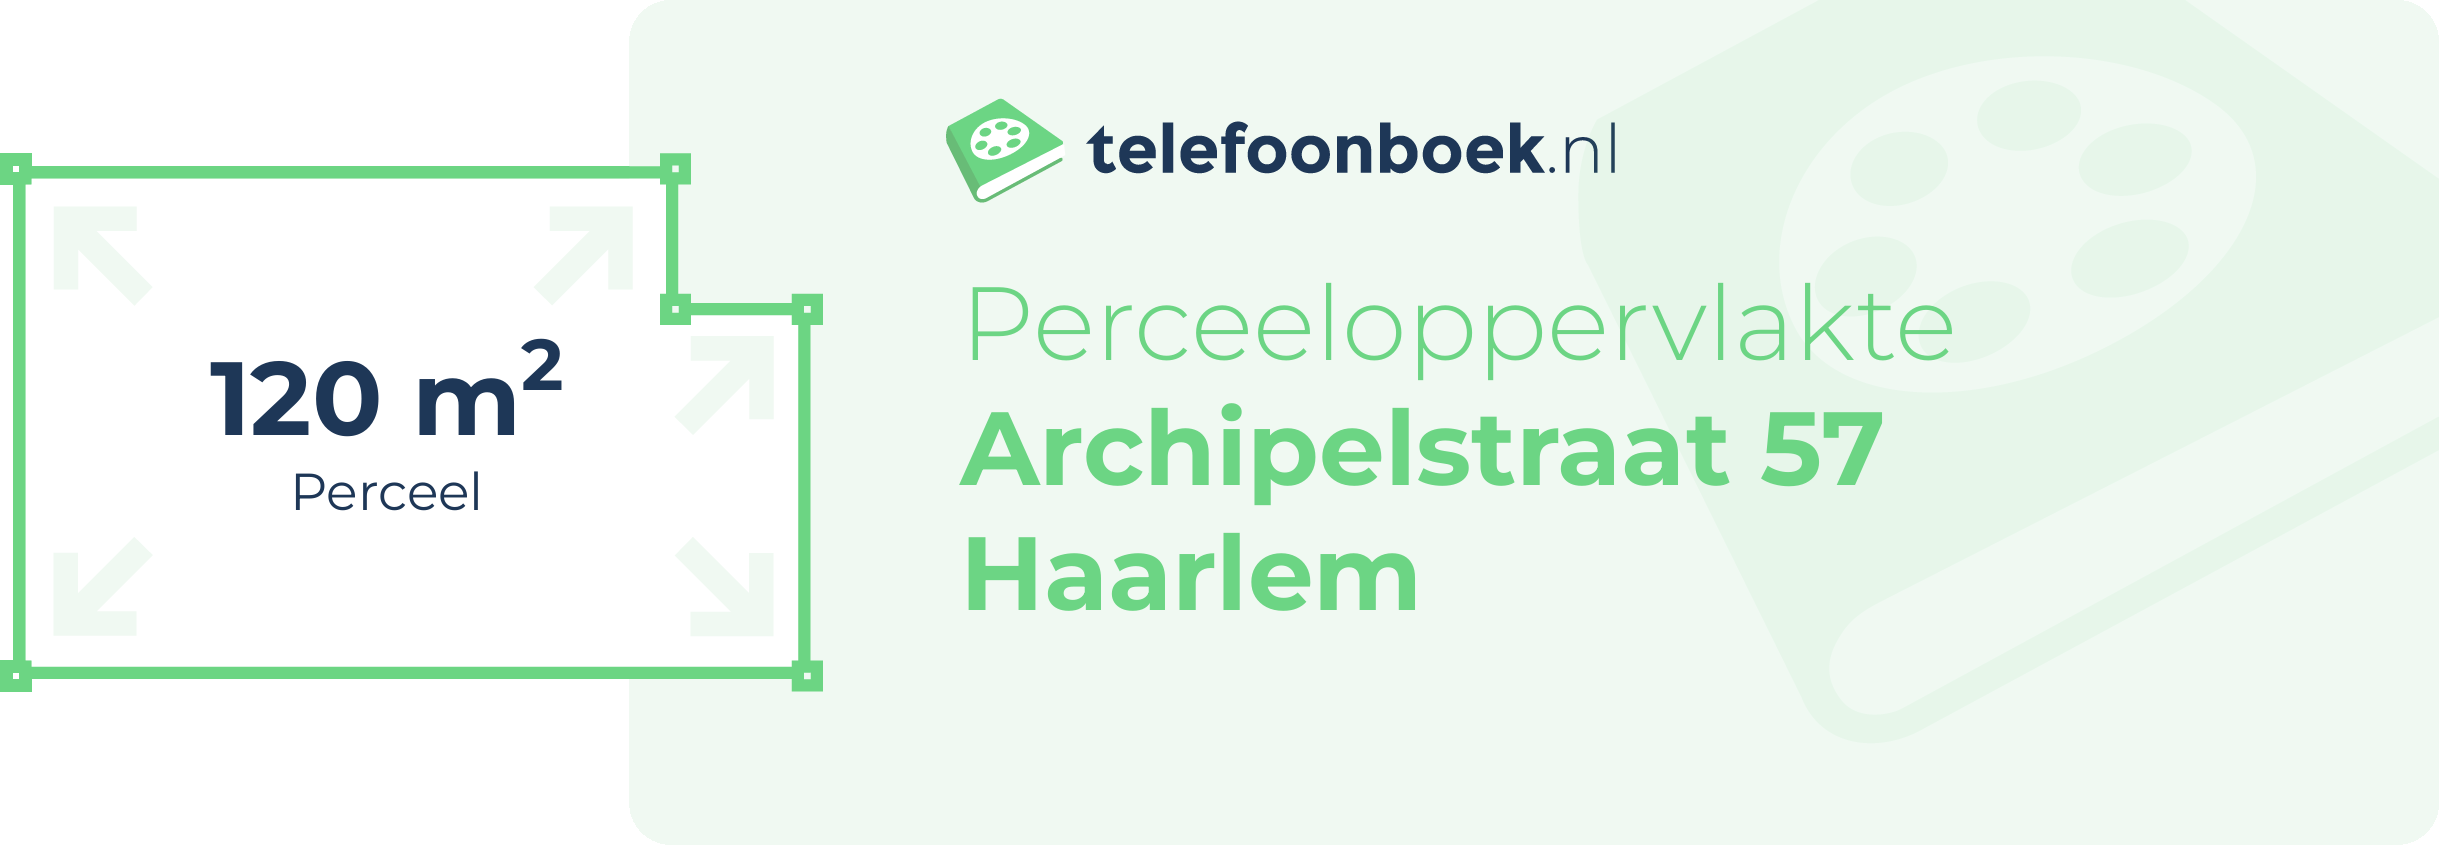 Perceeloppervlakte Archipelstraat 57 Haarlem